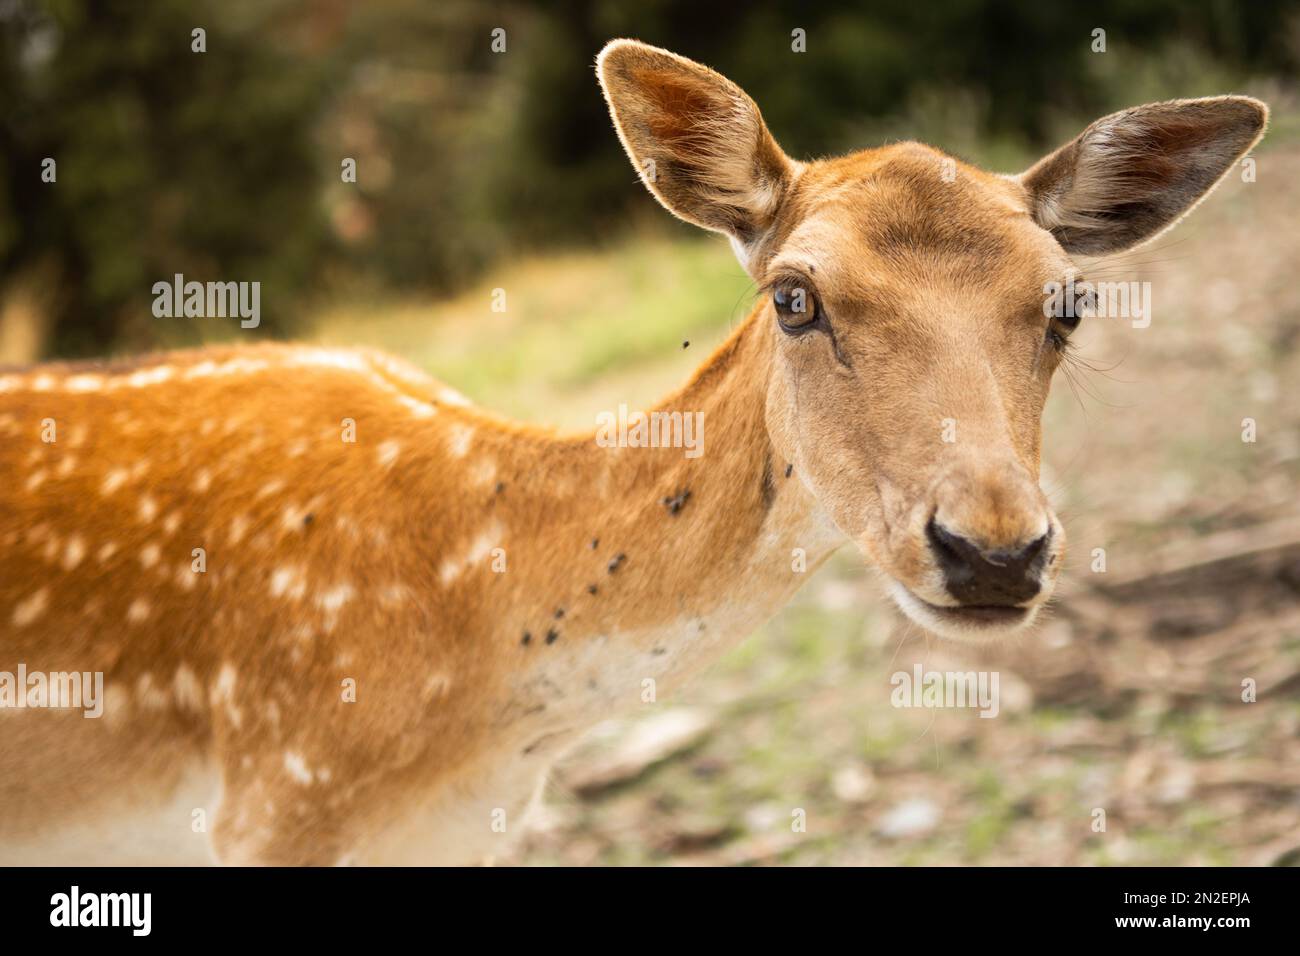 A close-up shot of an Iranian fallow deer (Dama dama mesopotamica) in a field Stock Photo